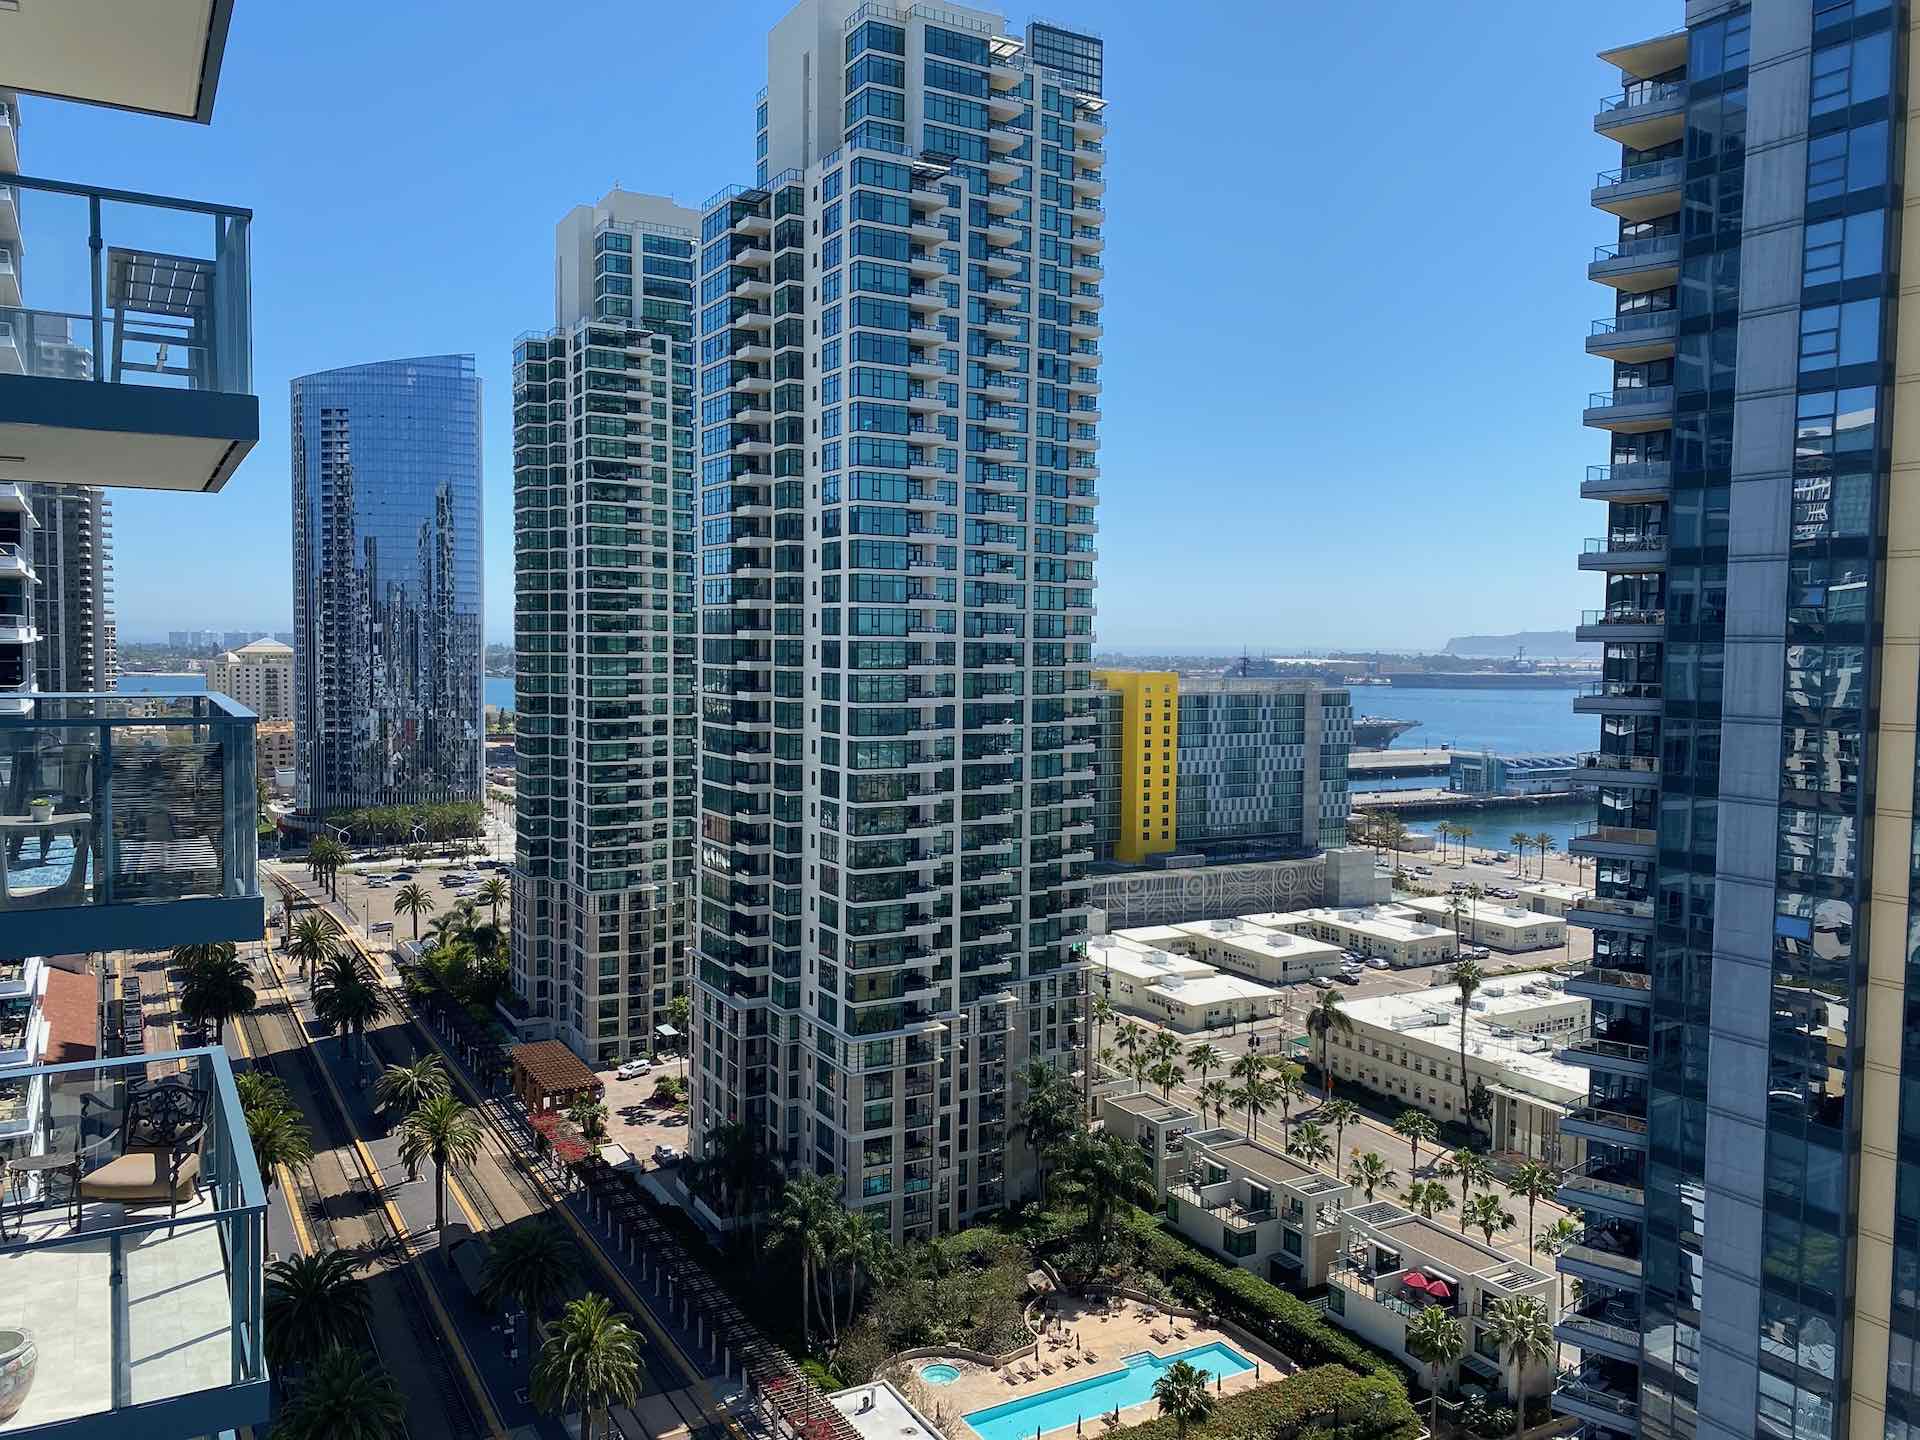 The Grande luxury condos in San Diego's Columbia Neighborhood